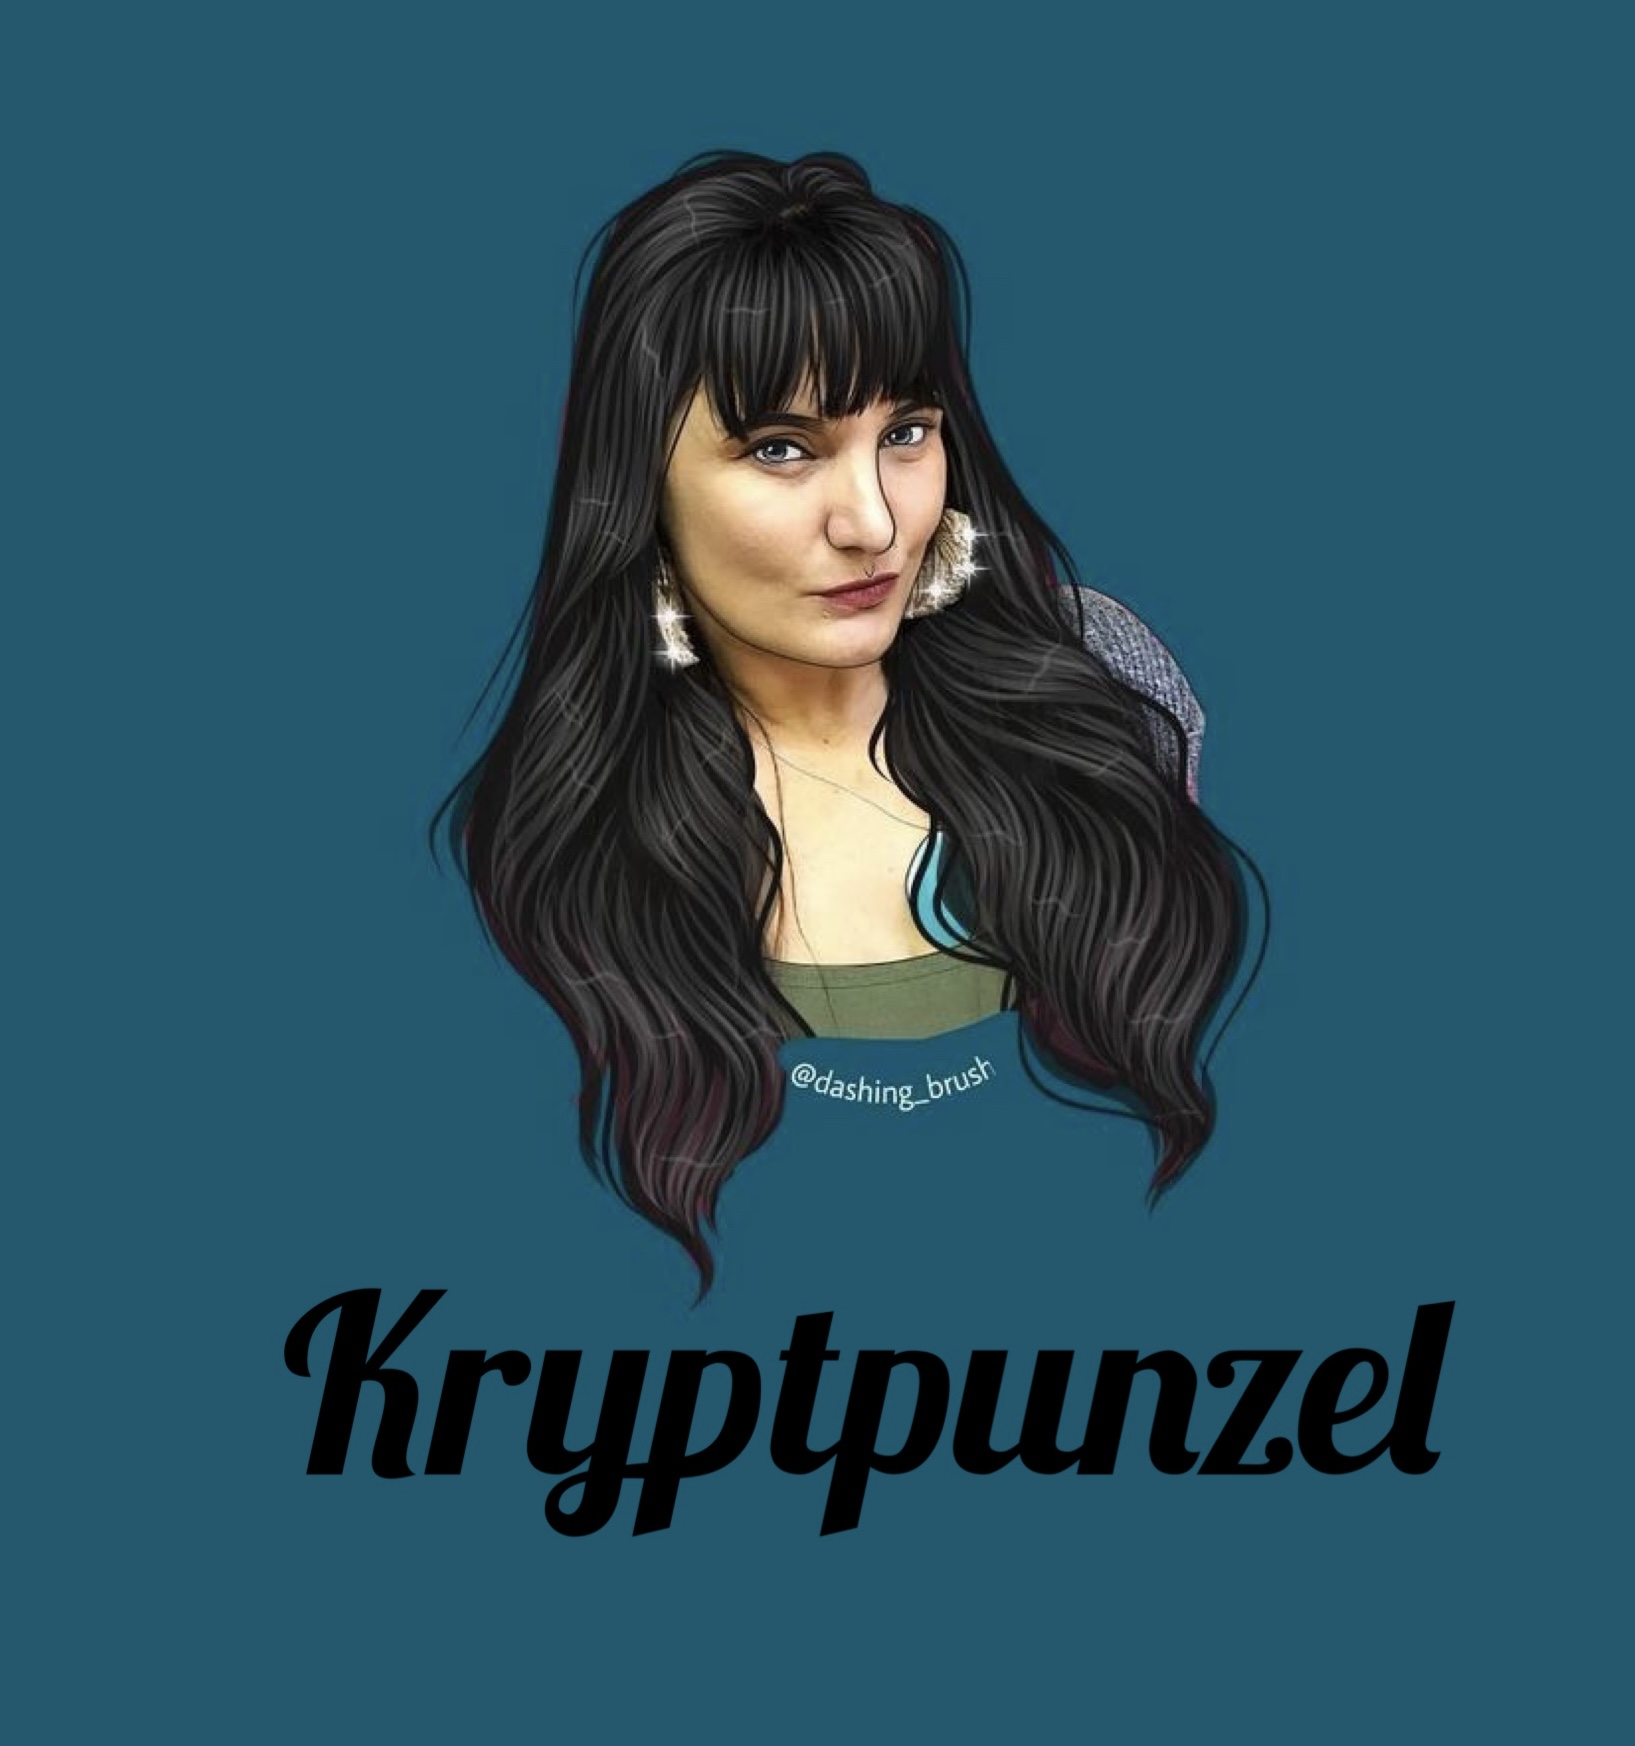 Kryptpunzel3